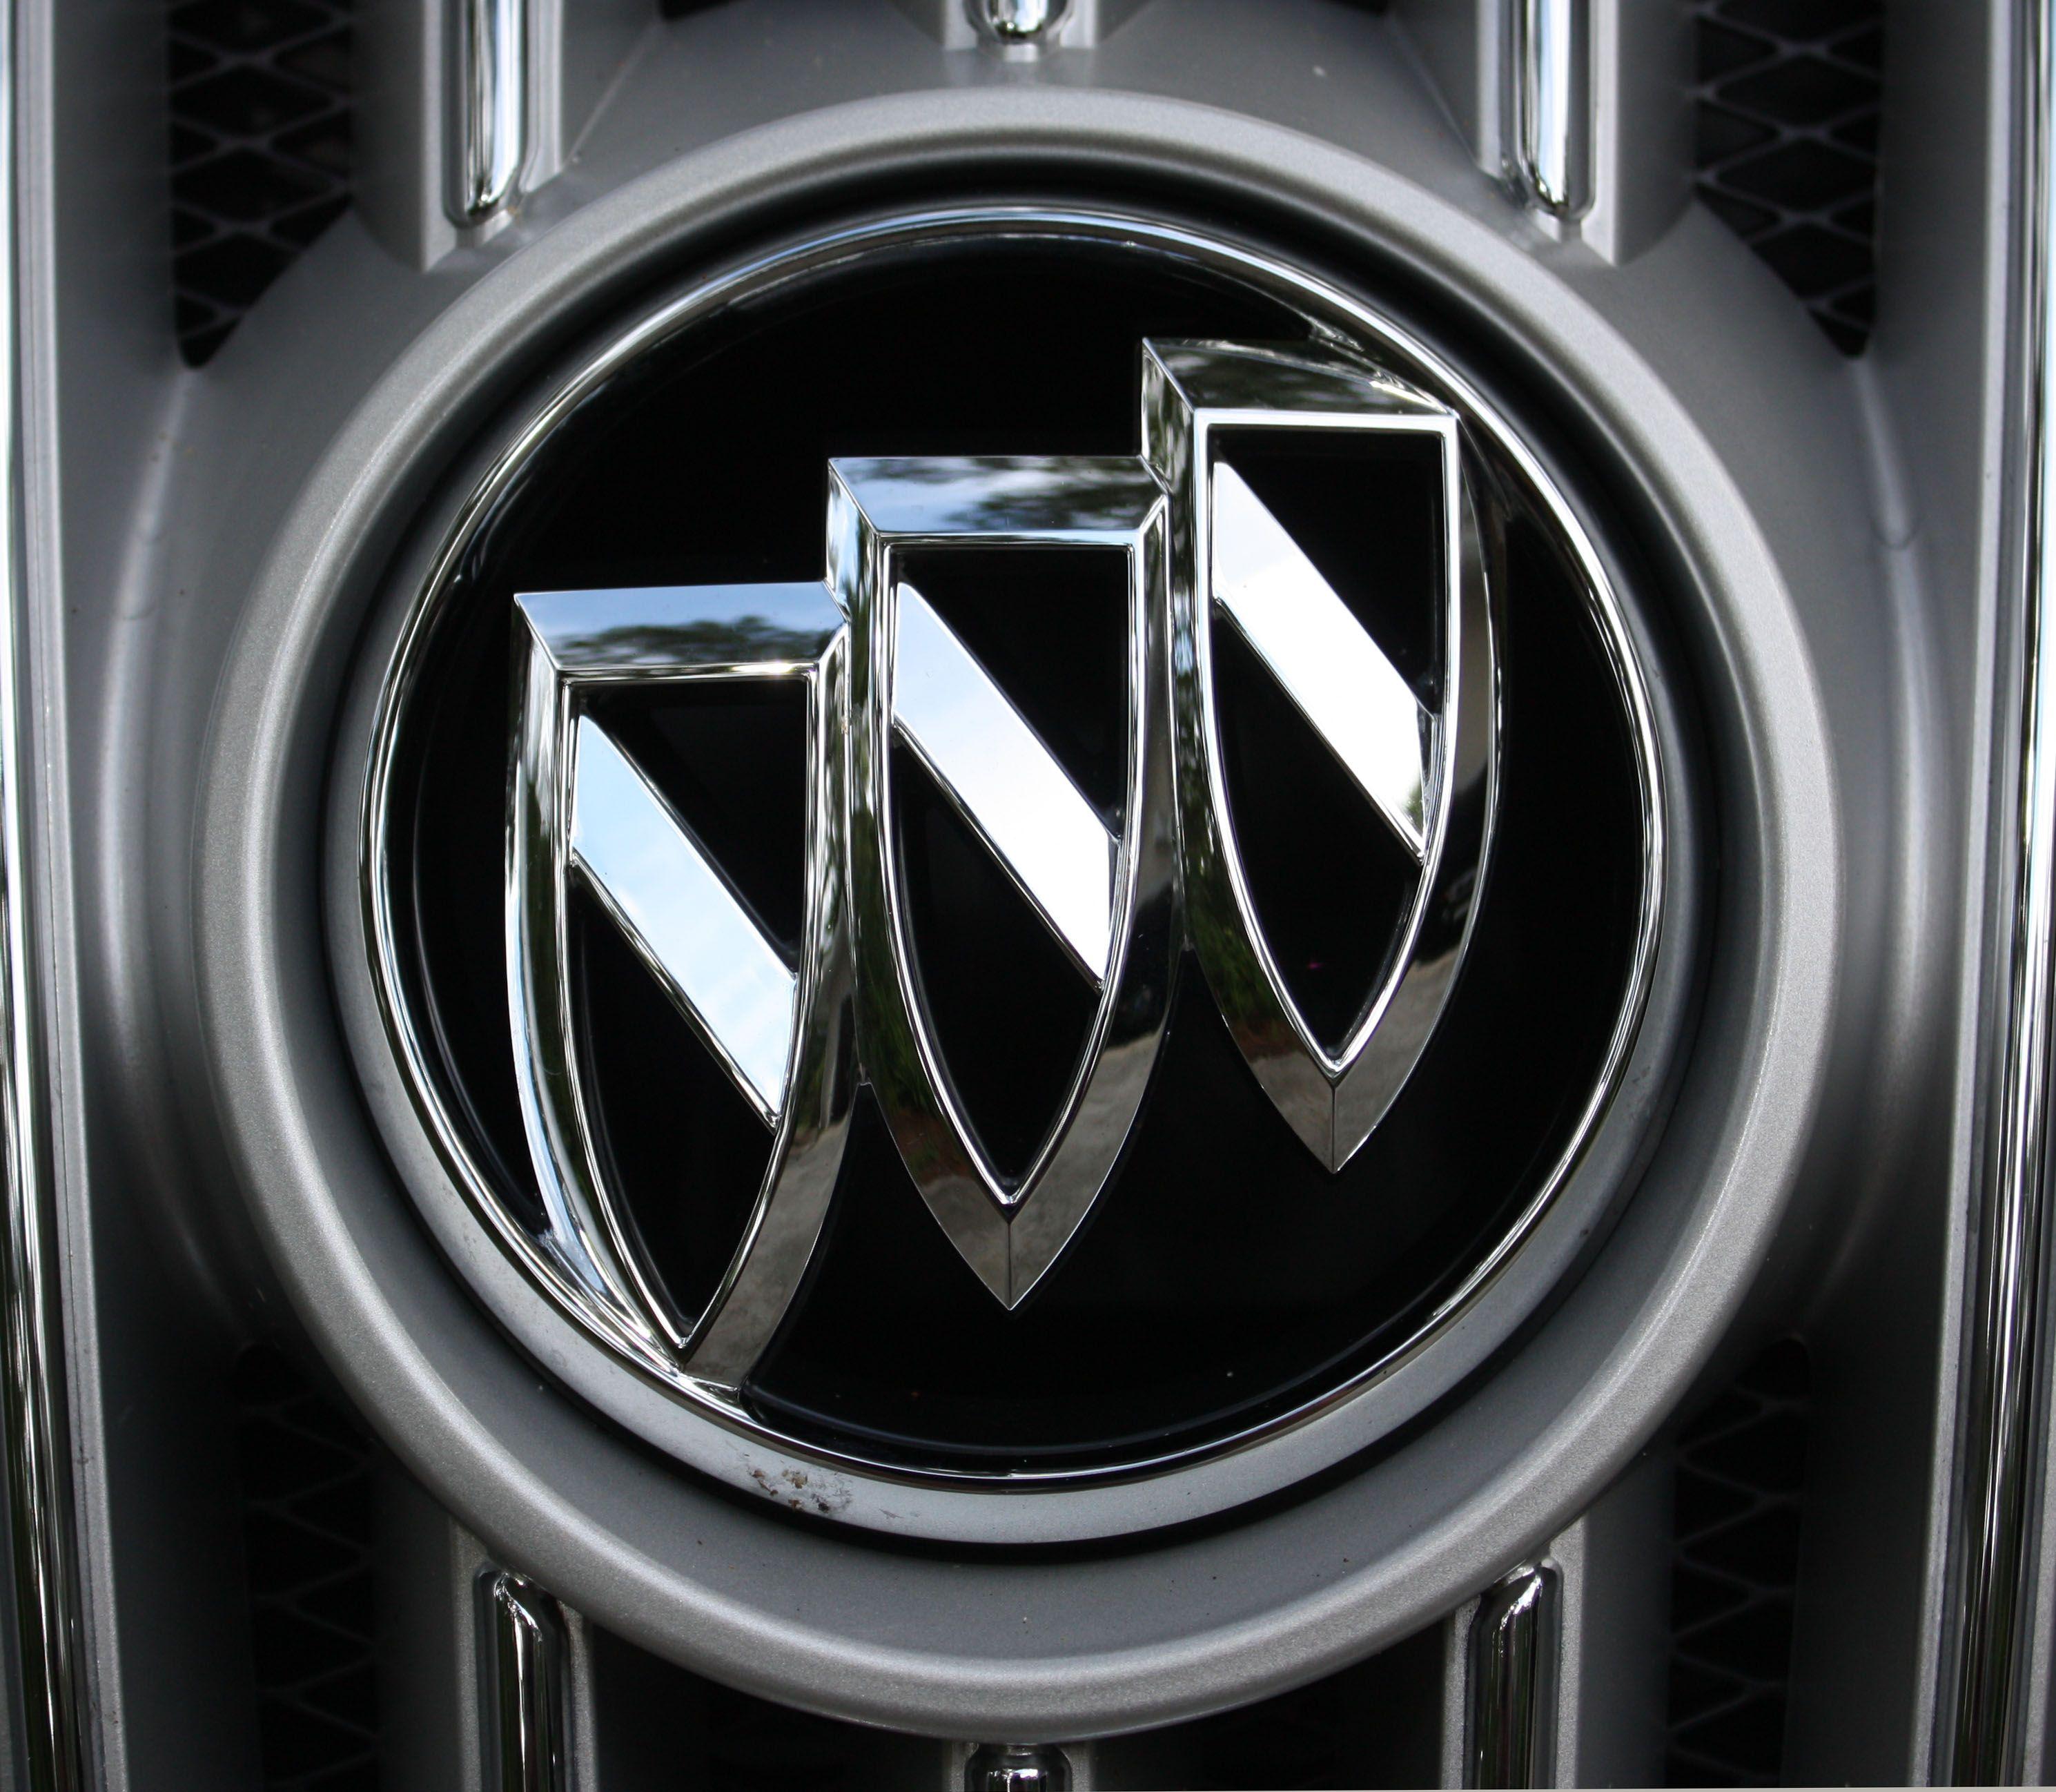 Buick Car Logo - Buick Logo, Buick Car Symbol Meaning and History | Car Brand Names.com